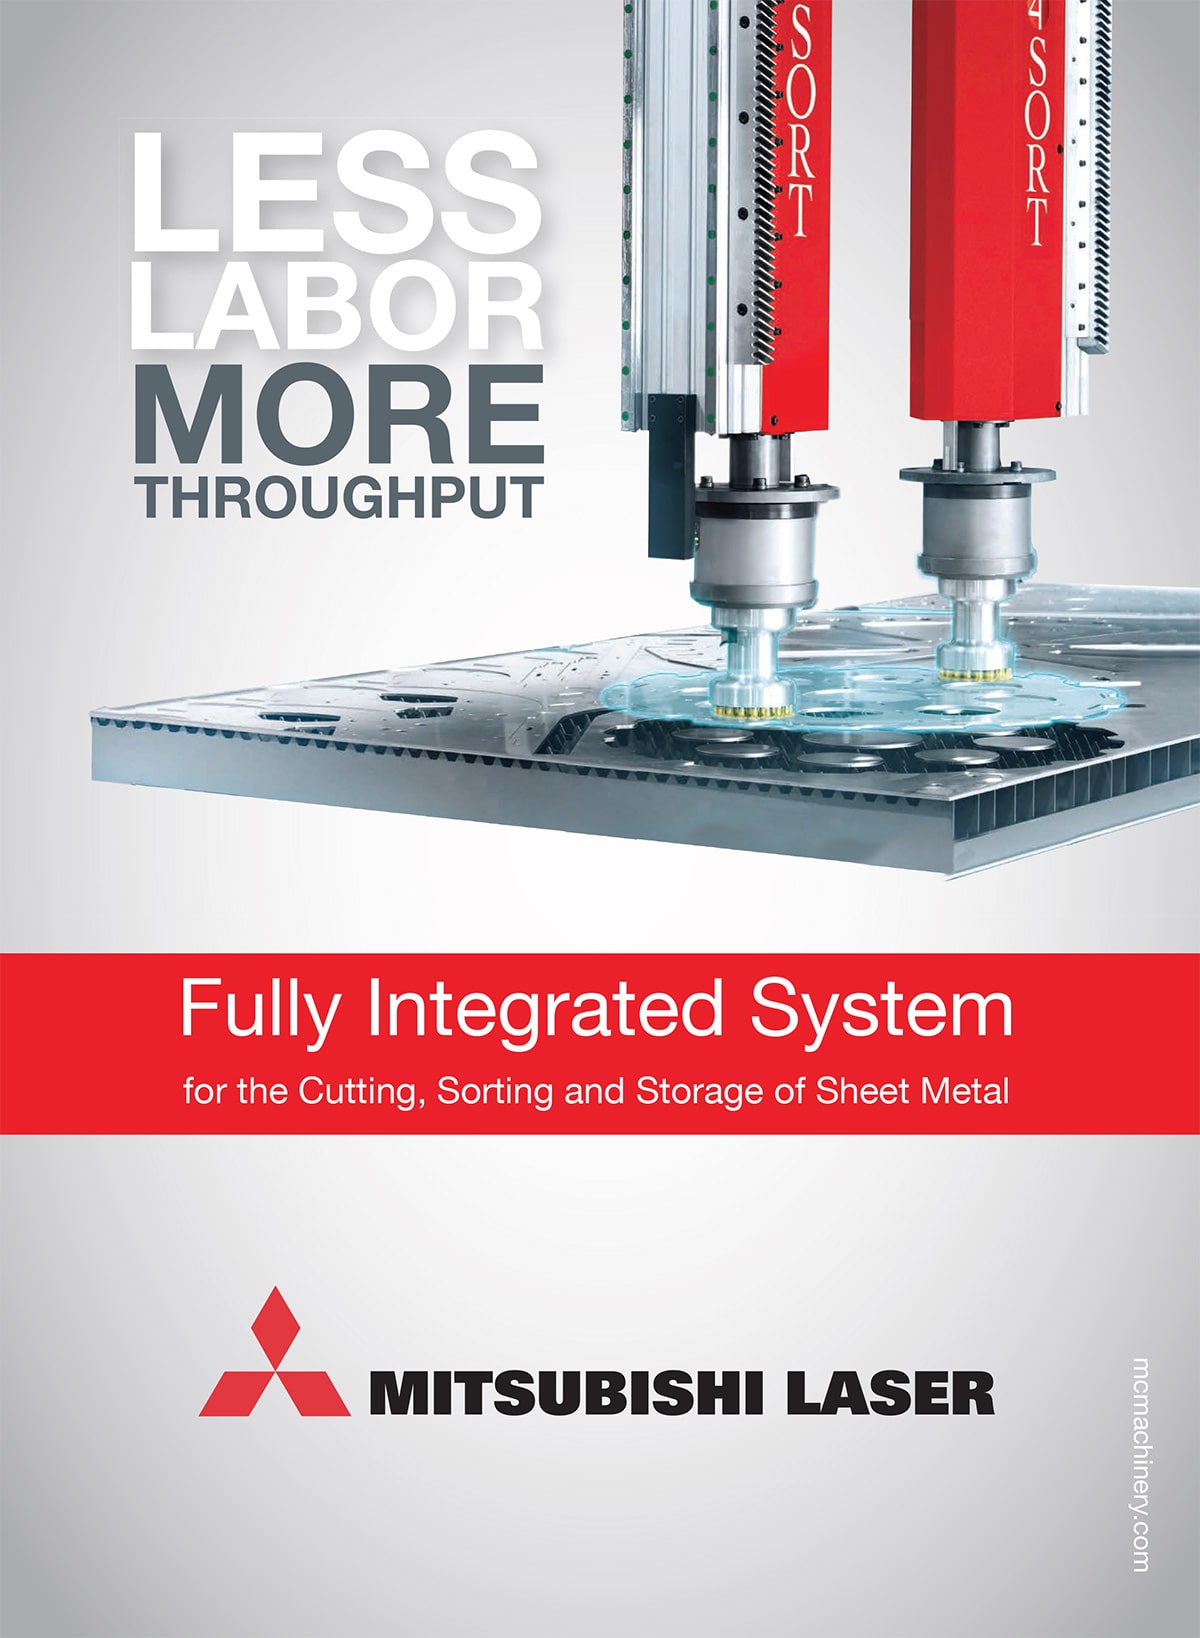 Mitsubishi Laser Advertisement 